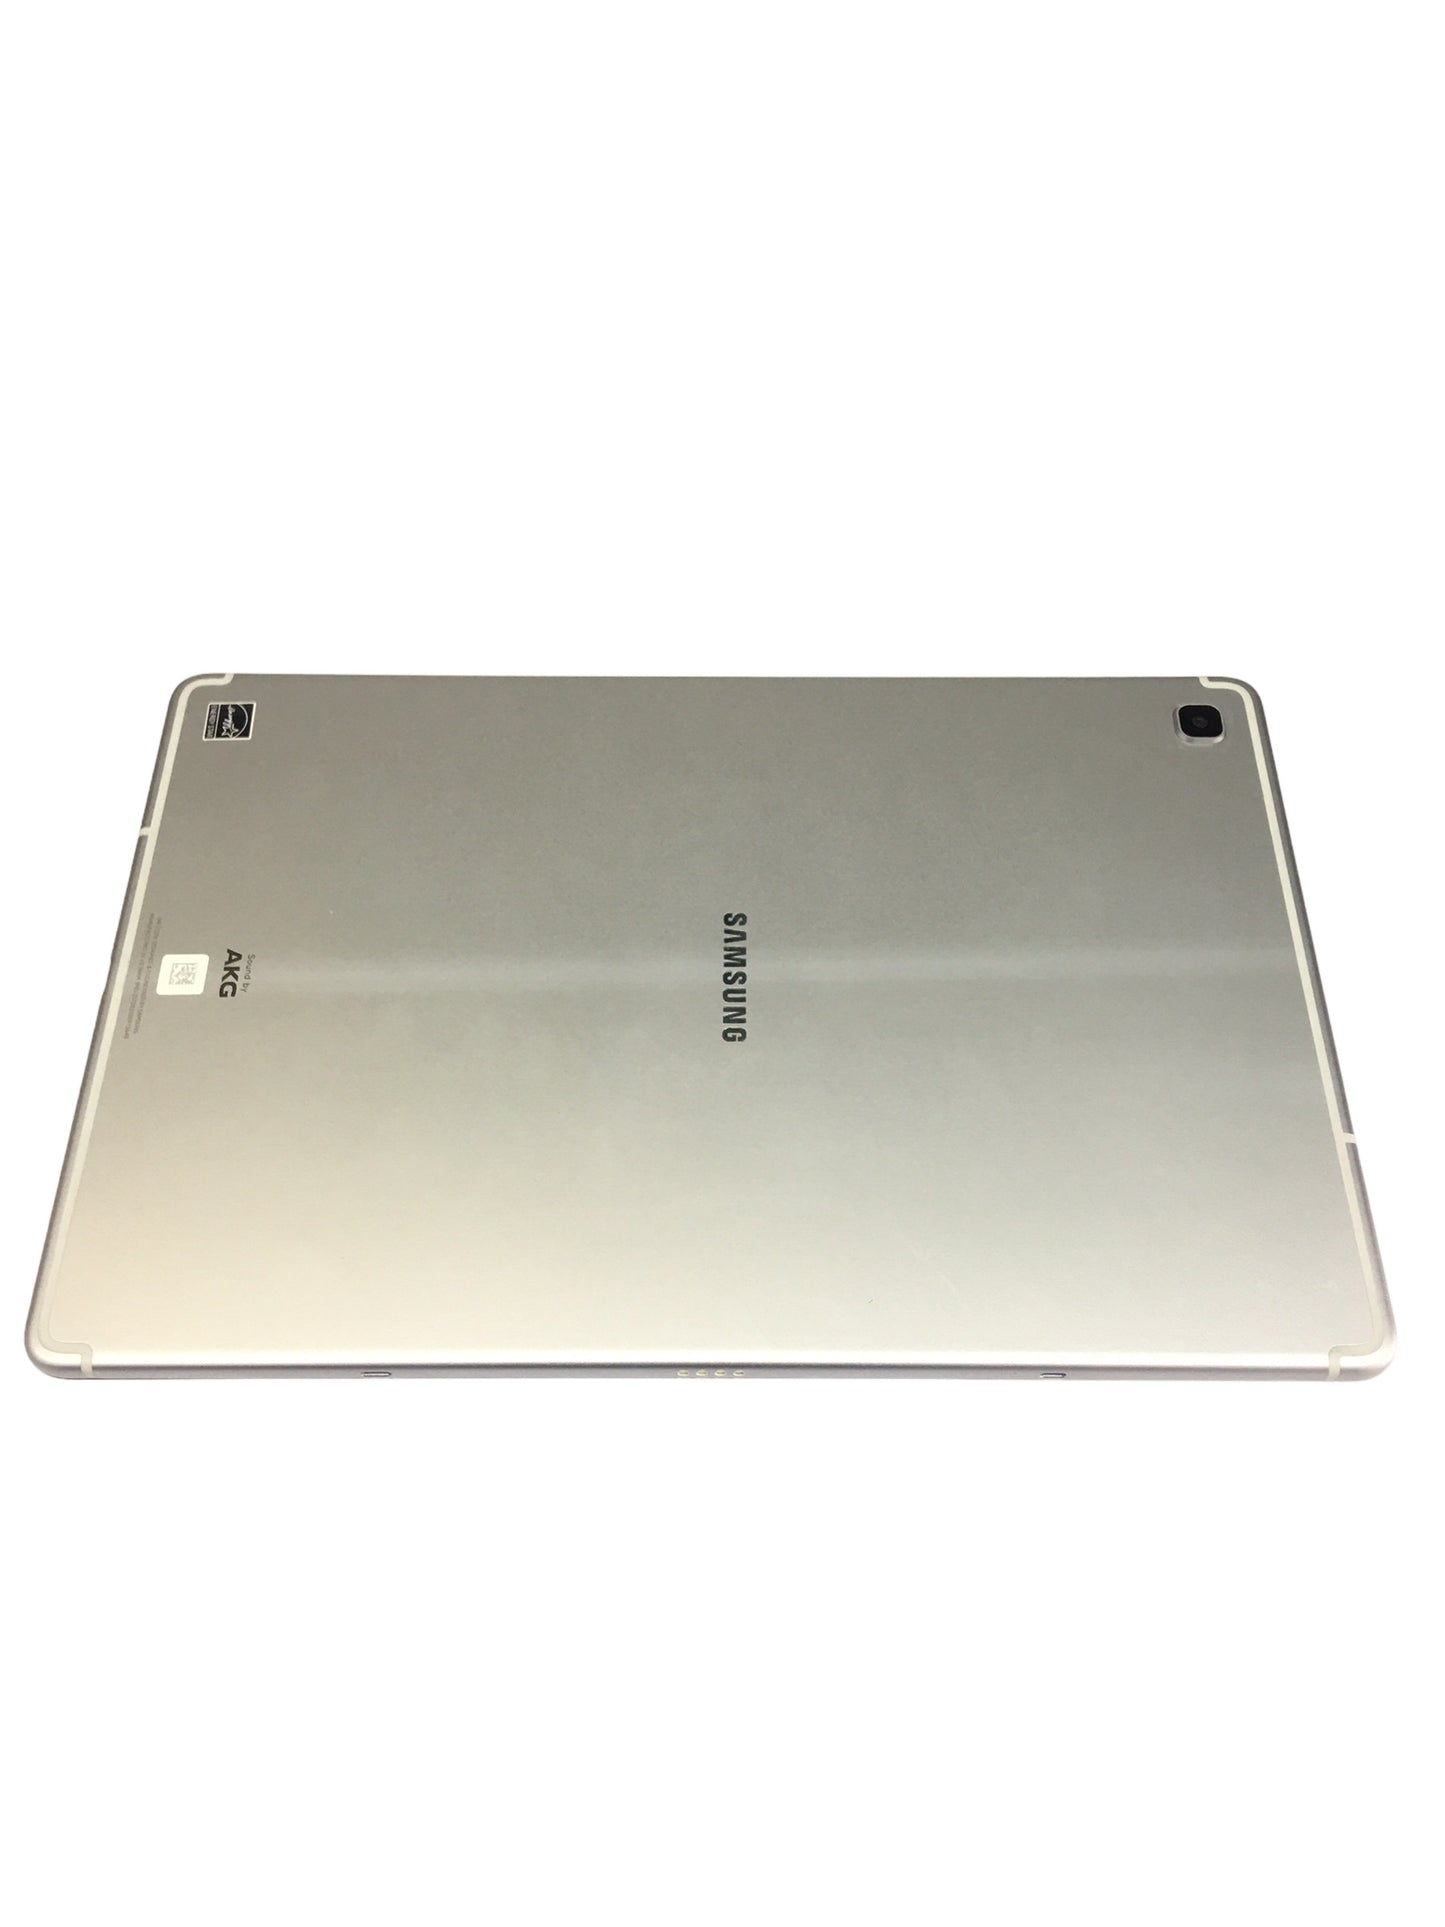 Samsung Galaxy Tab S5e SM-T727V 64GB 10.5 Inches